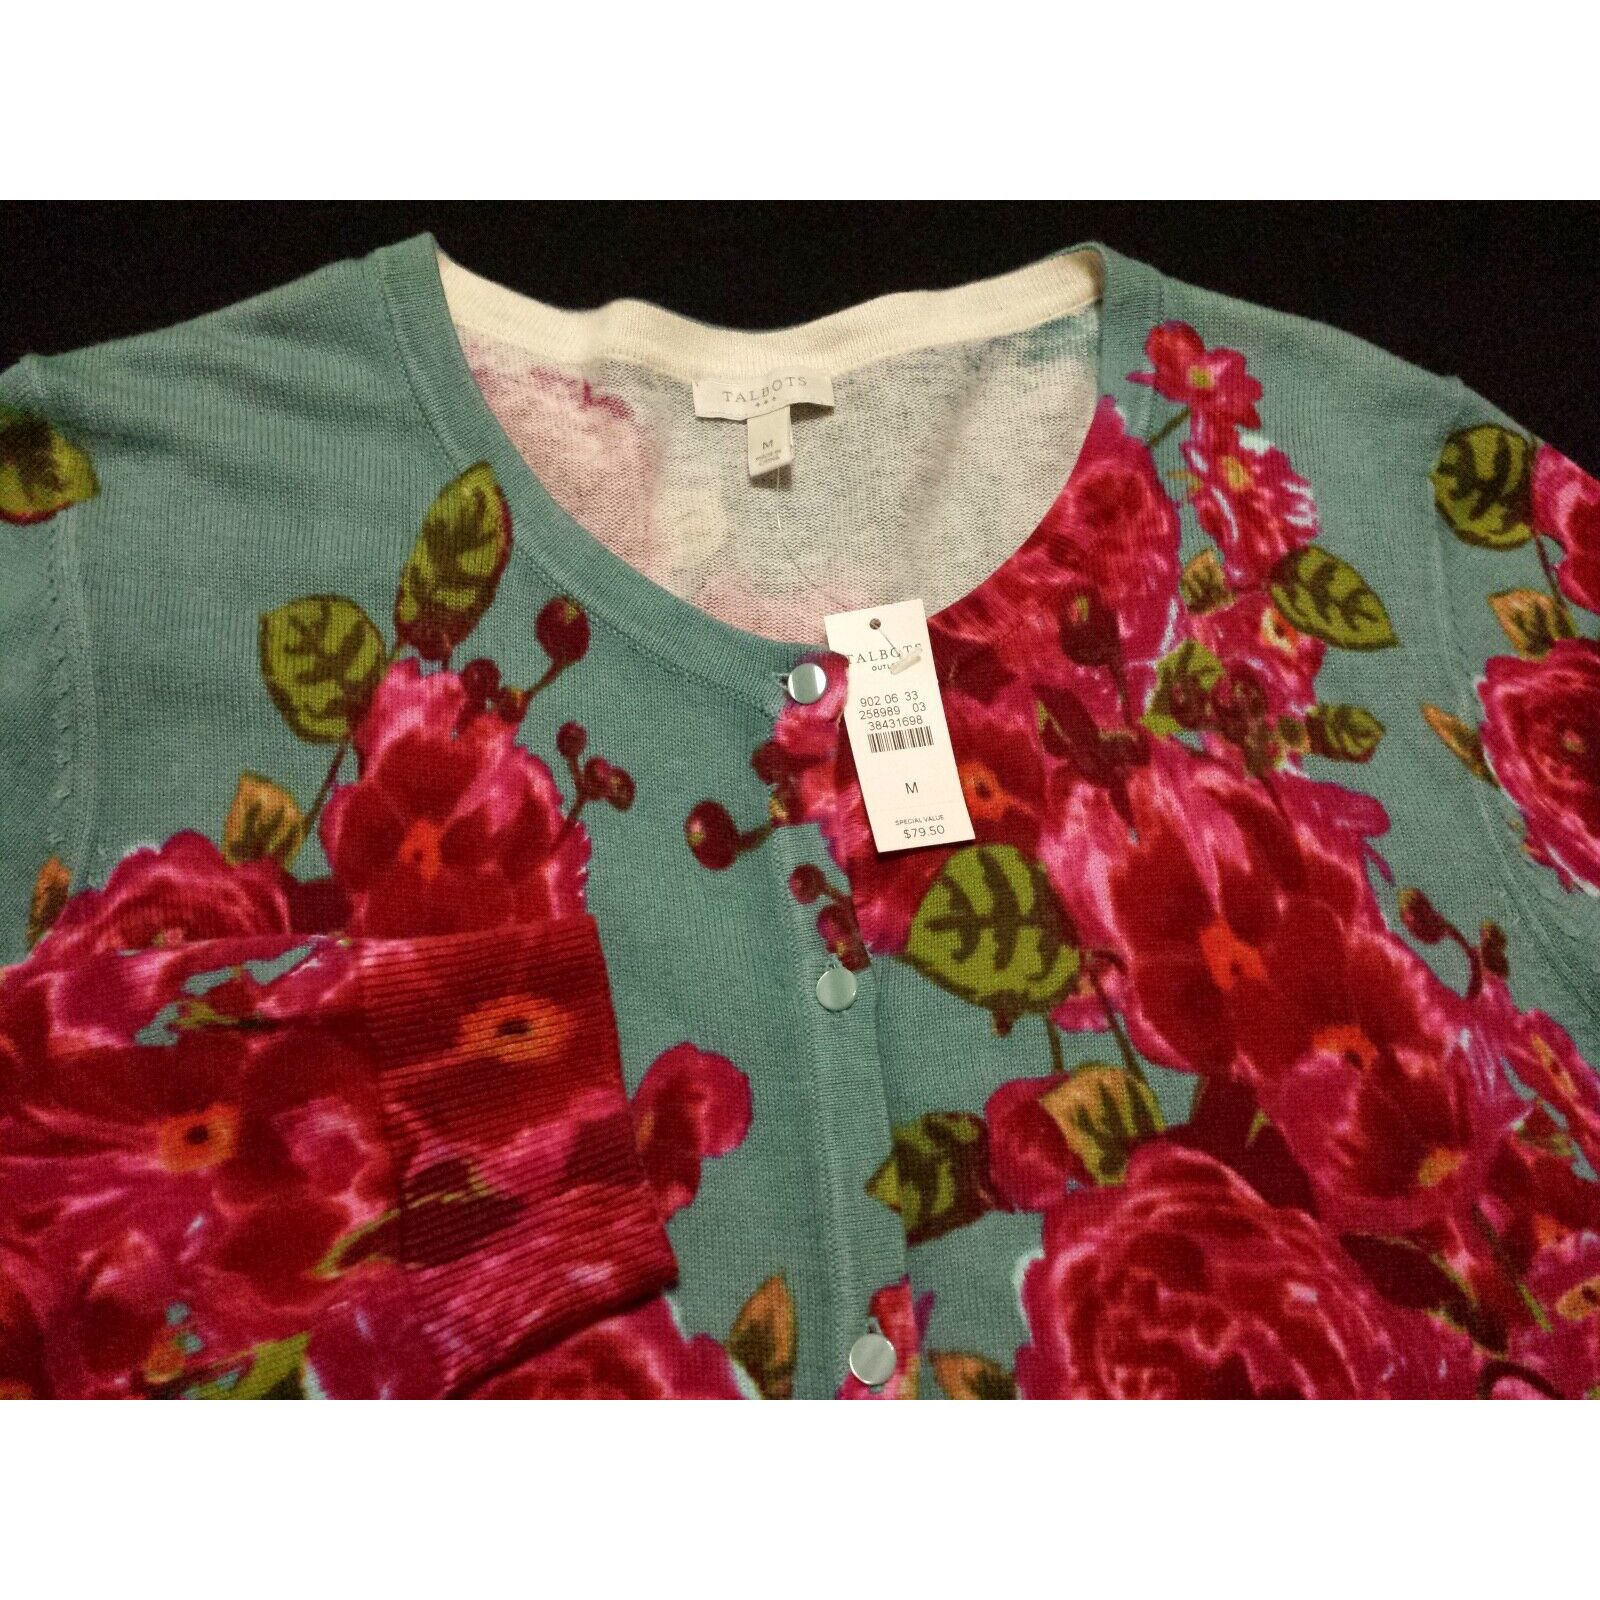 TALBOTS Women's Size M Medium Sweater Cardigan 3/4 Sleeve Floral